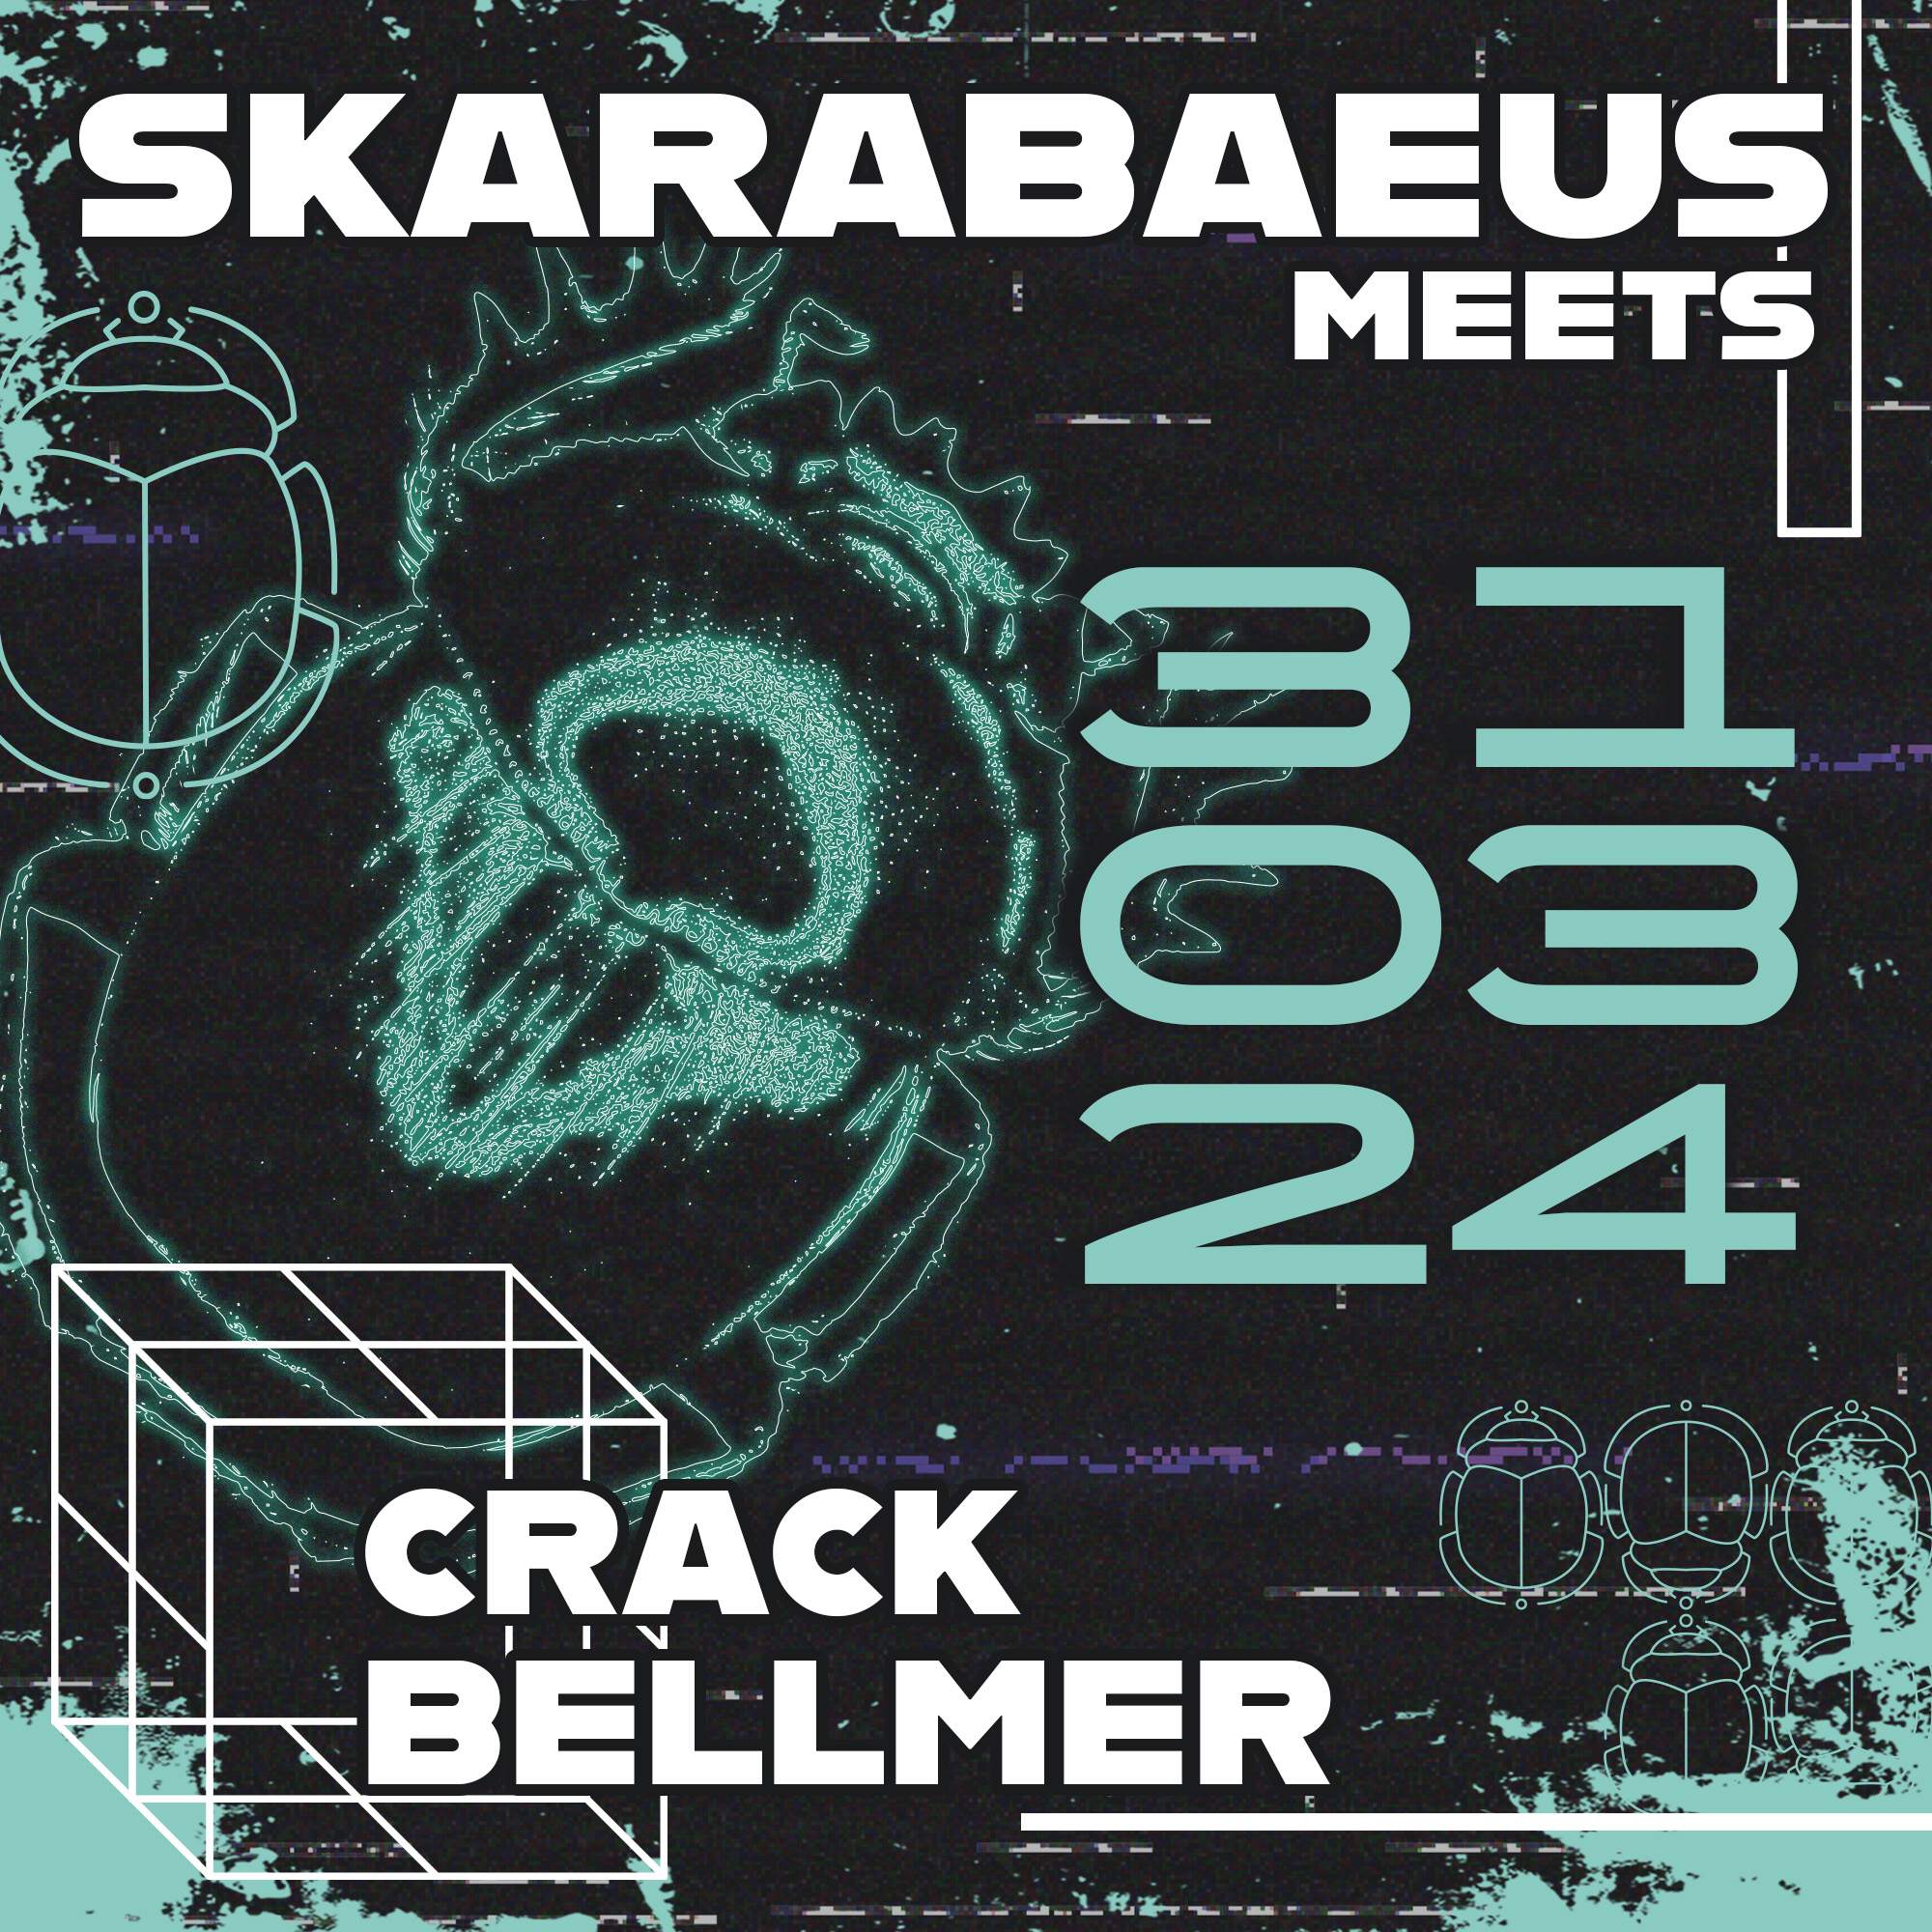 Skarabaeus meets IV - フライヤー表